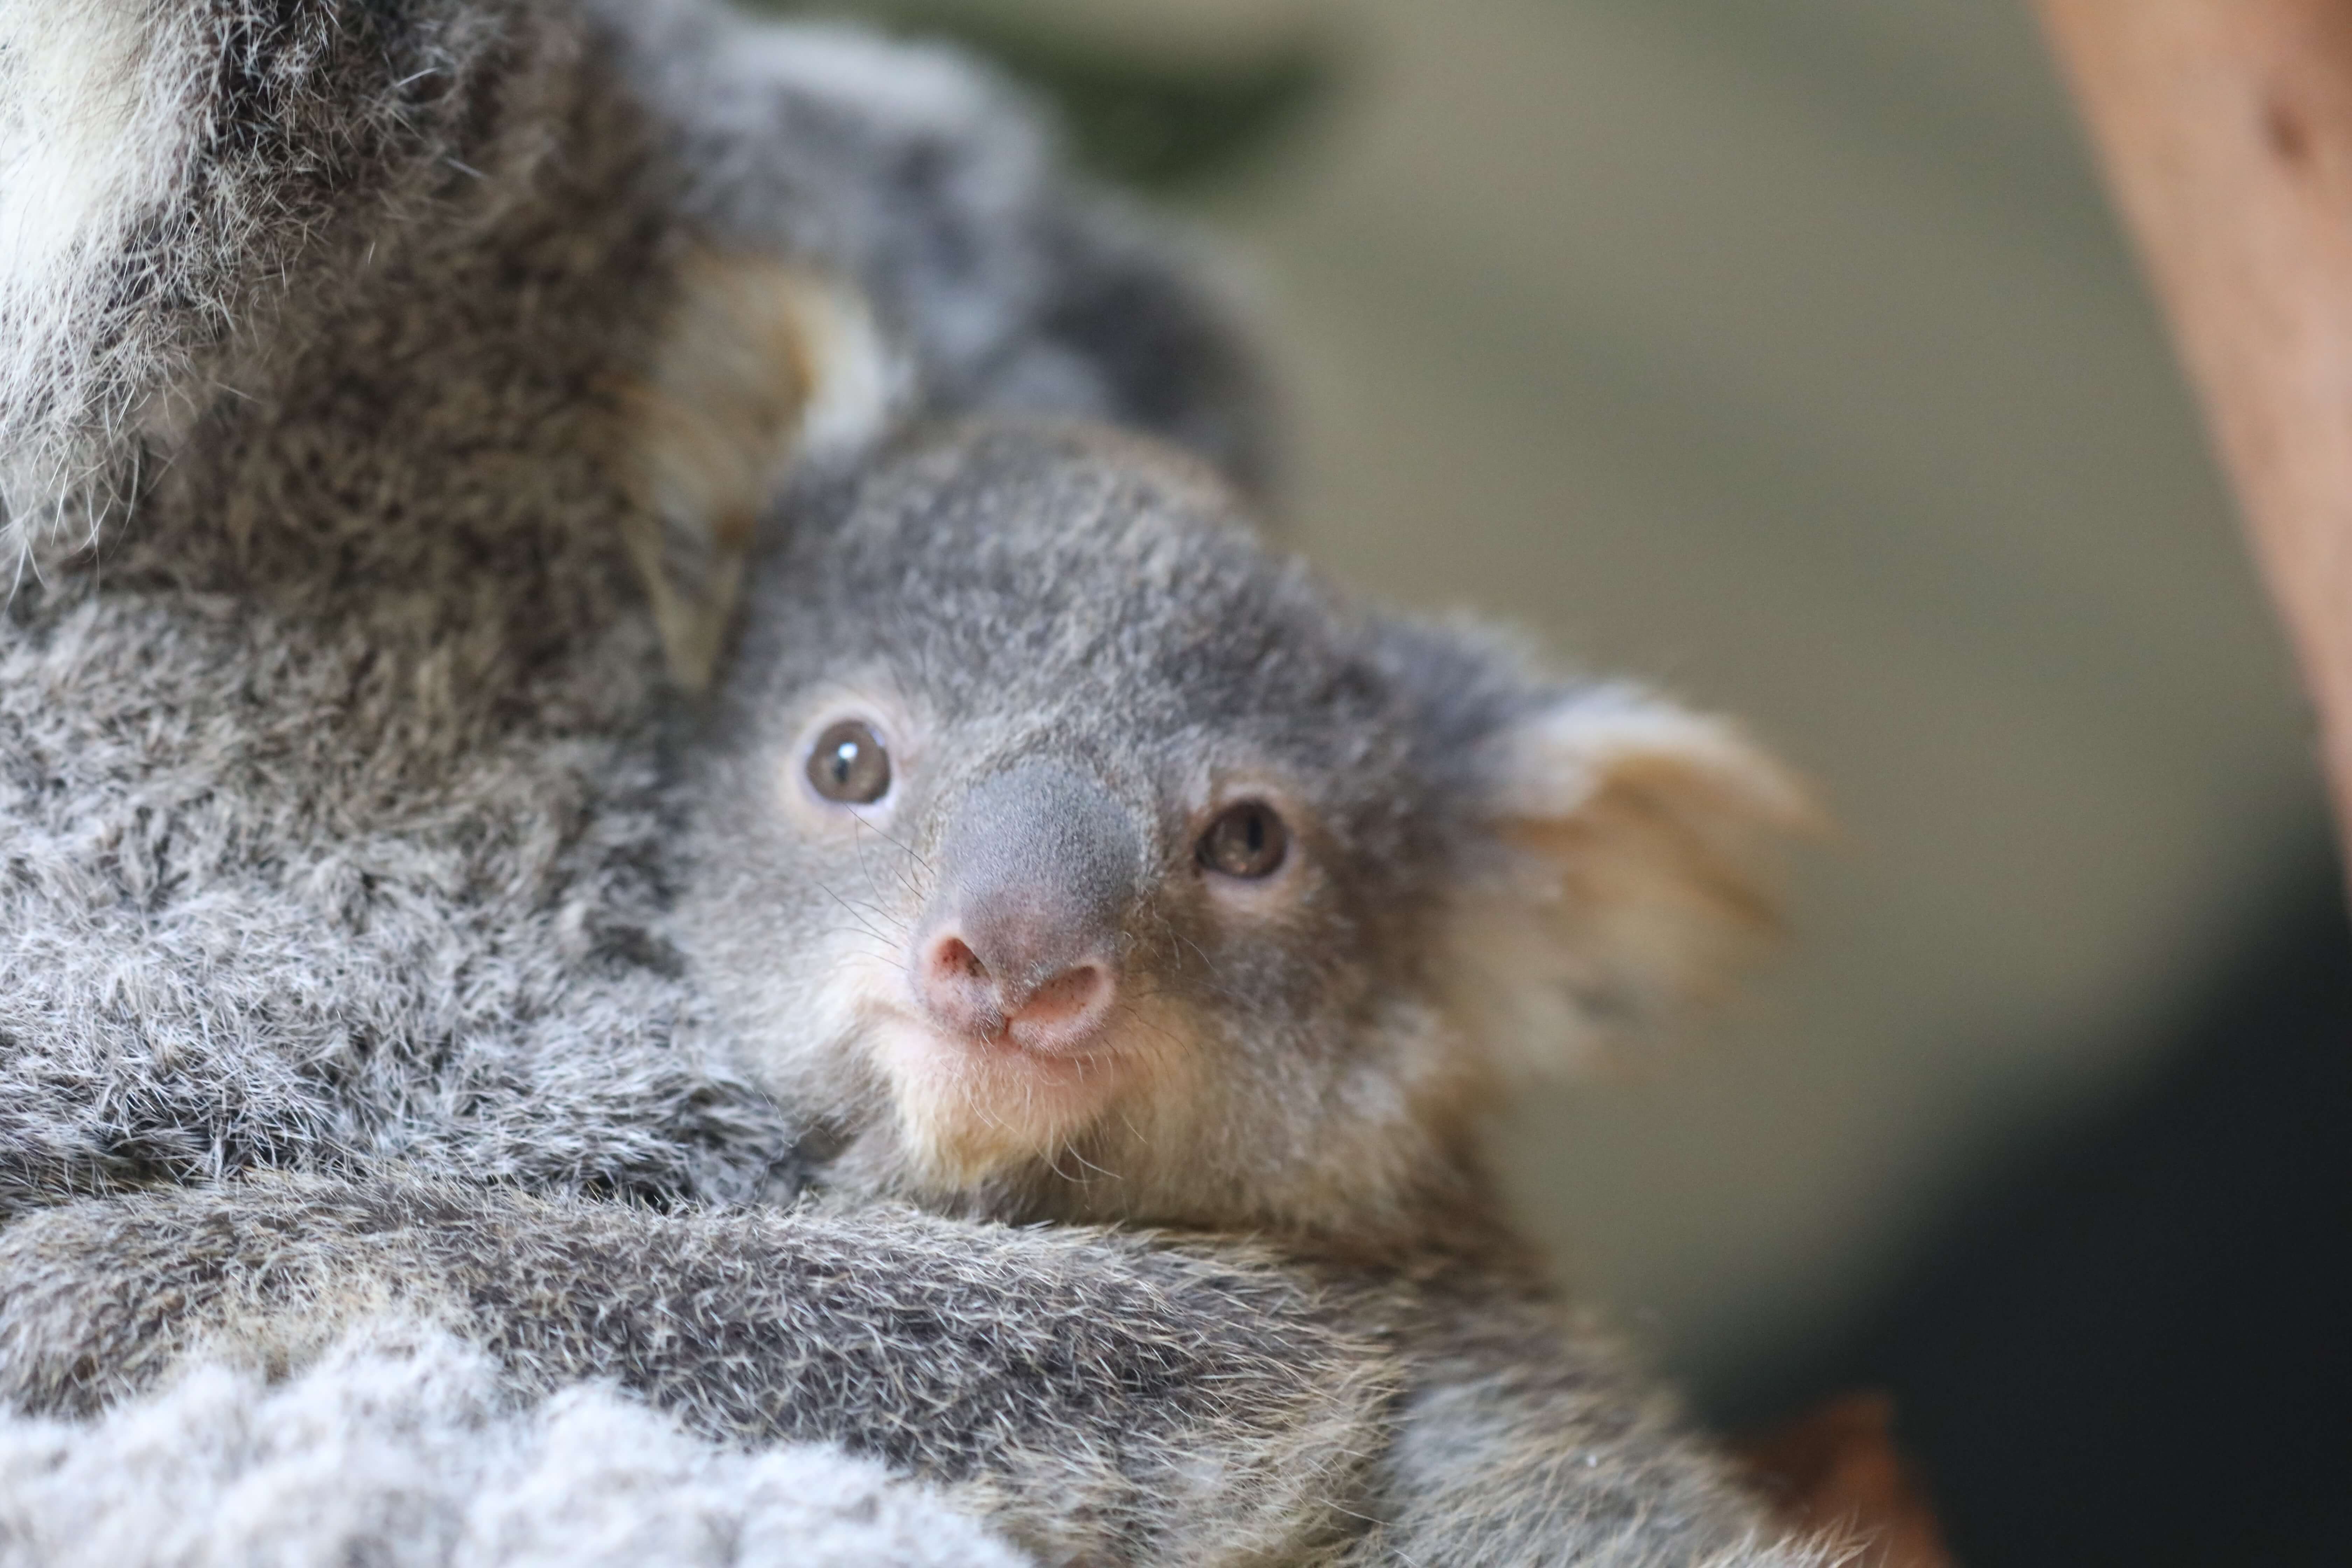 6 Cute new koala joeys bring joy during lockdown | News | Love Central Coast